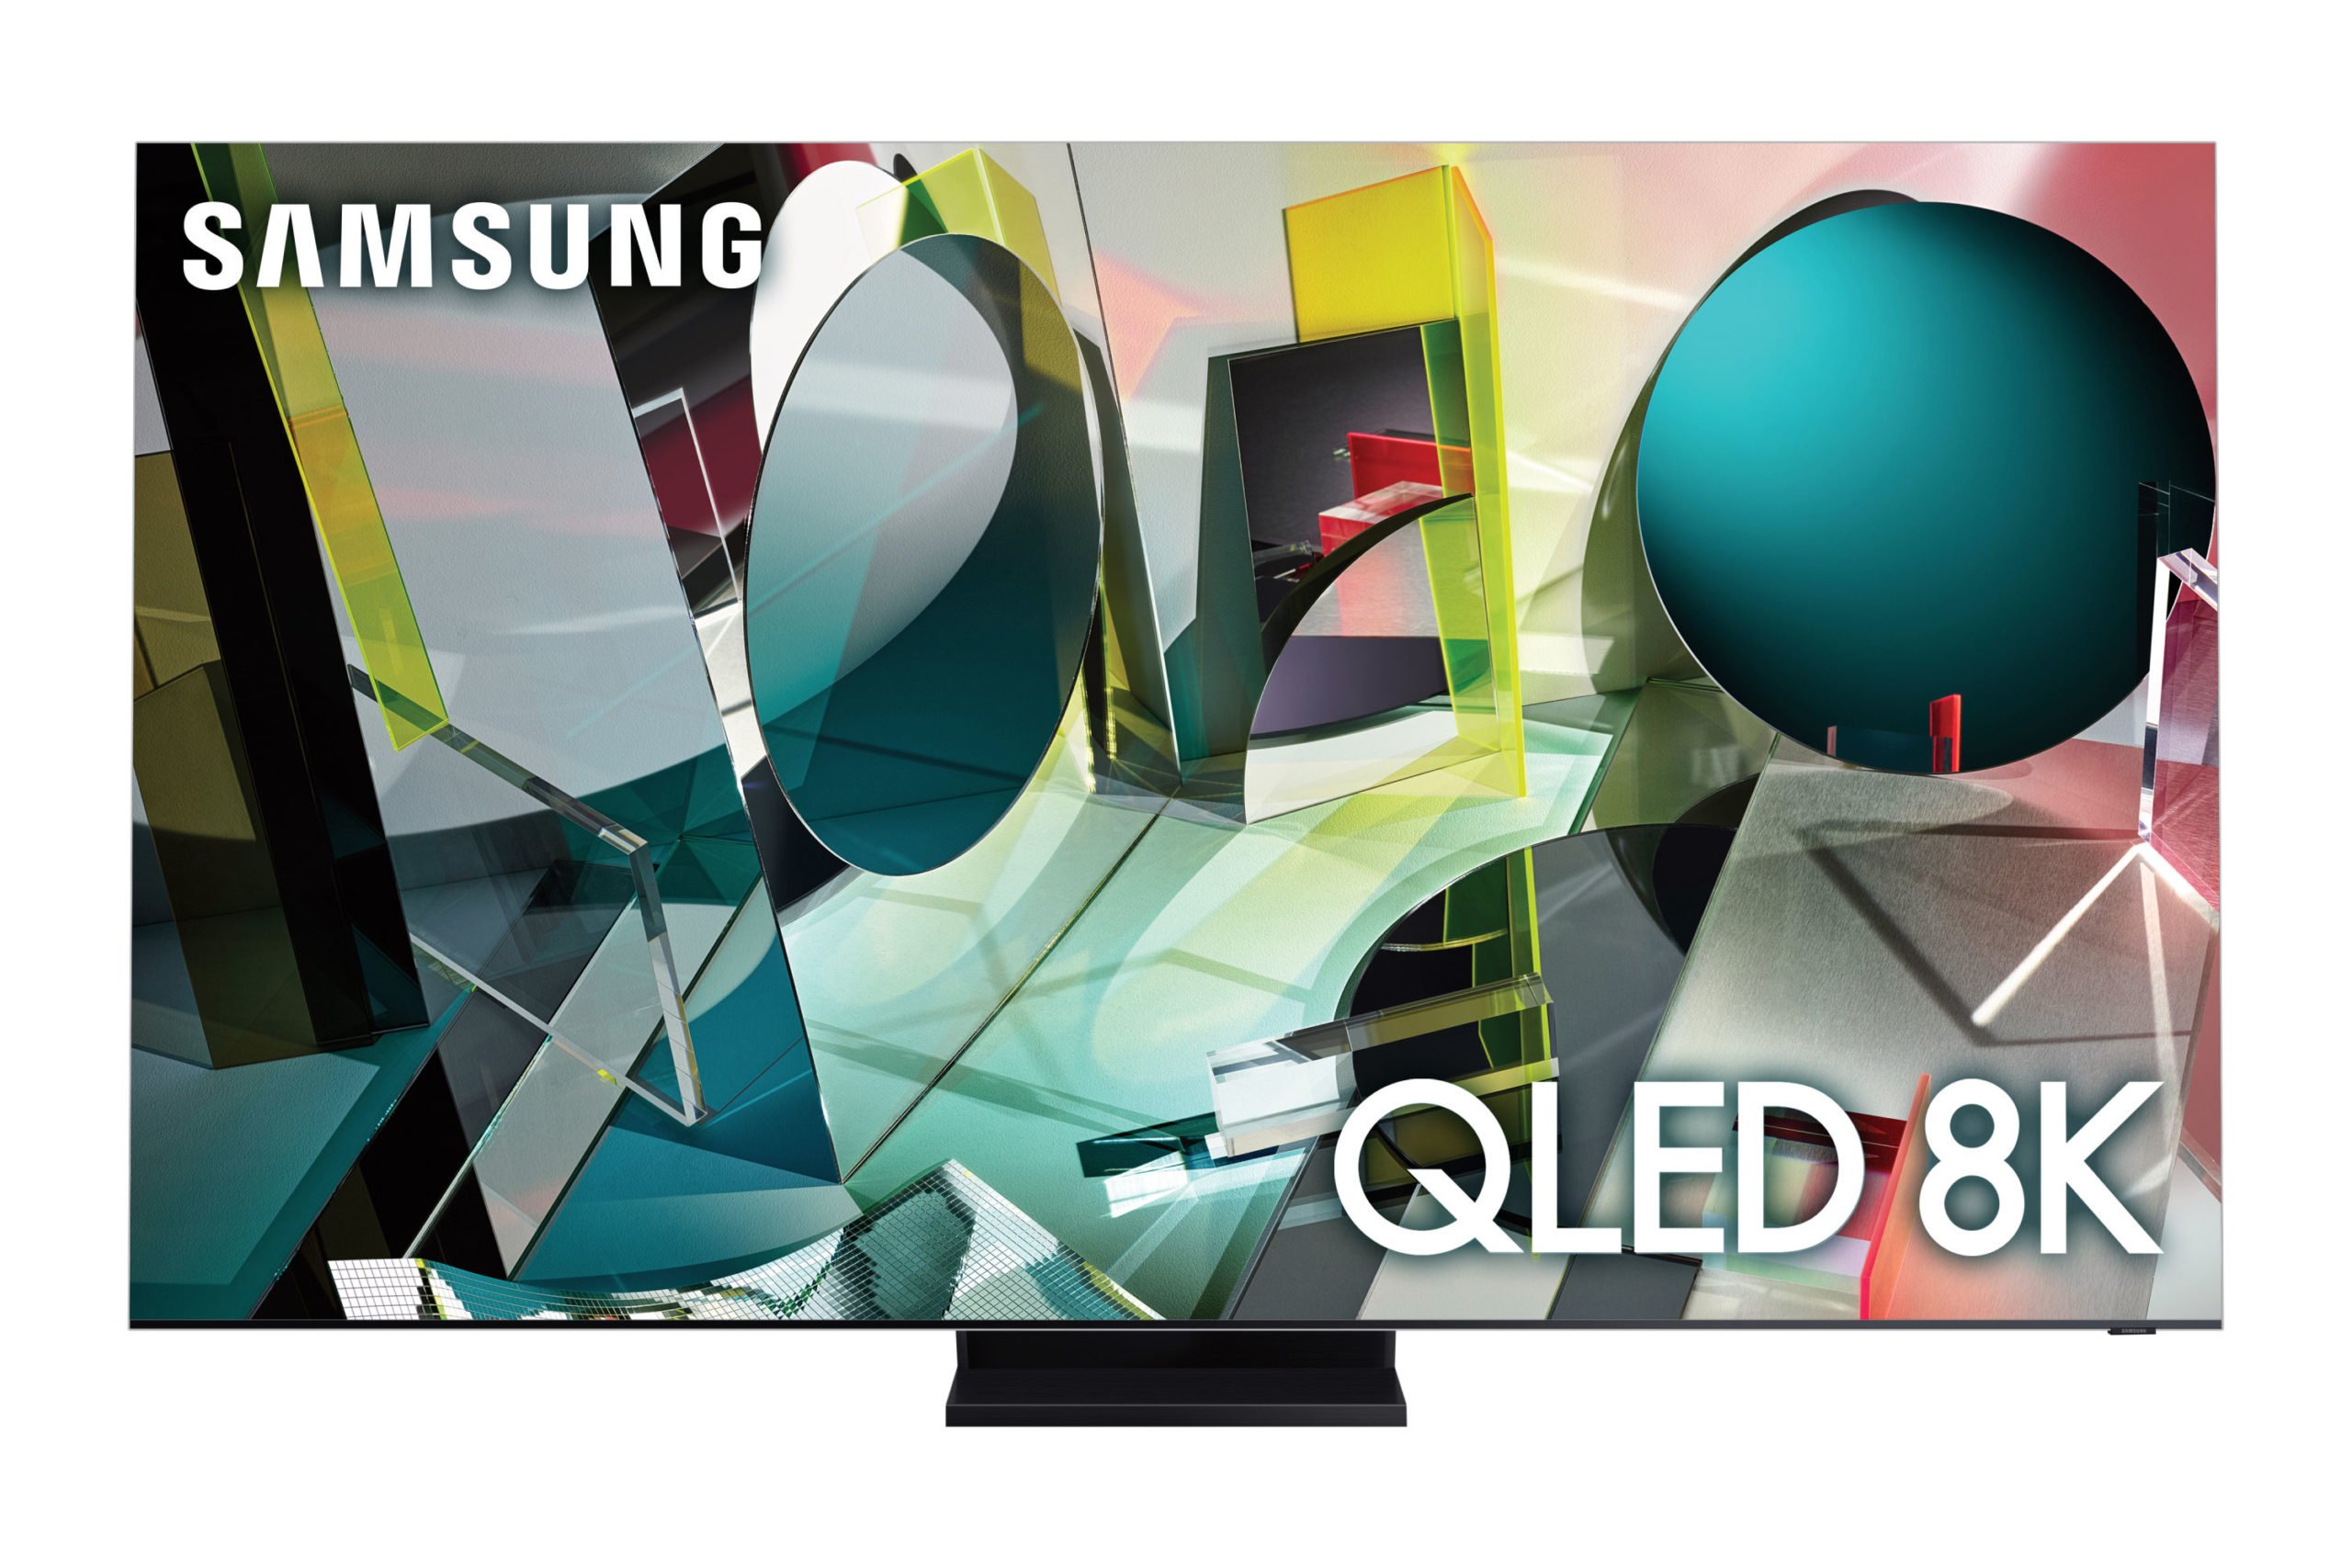 Samsung and MediaTek unveil world's first 8K TV that support Wi-Fi 6E - Gizmochina